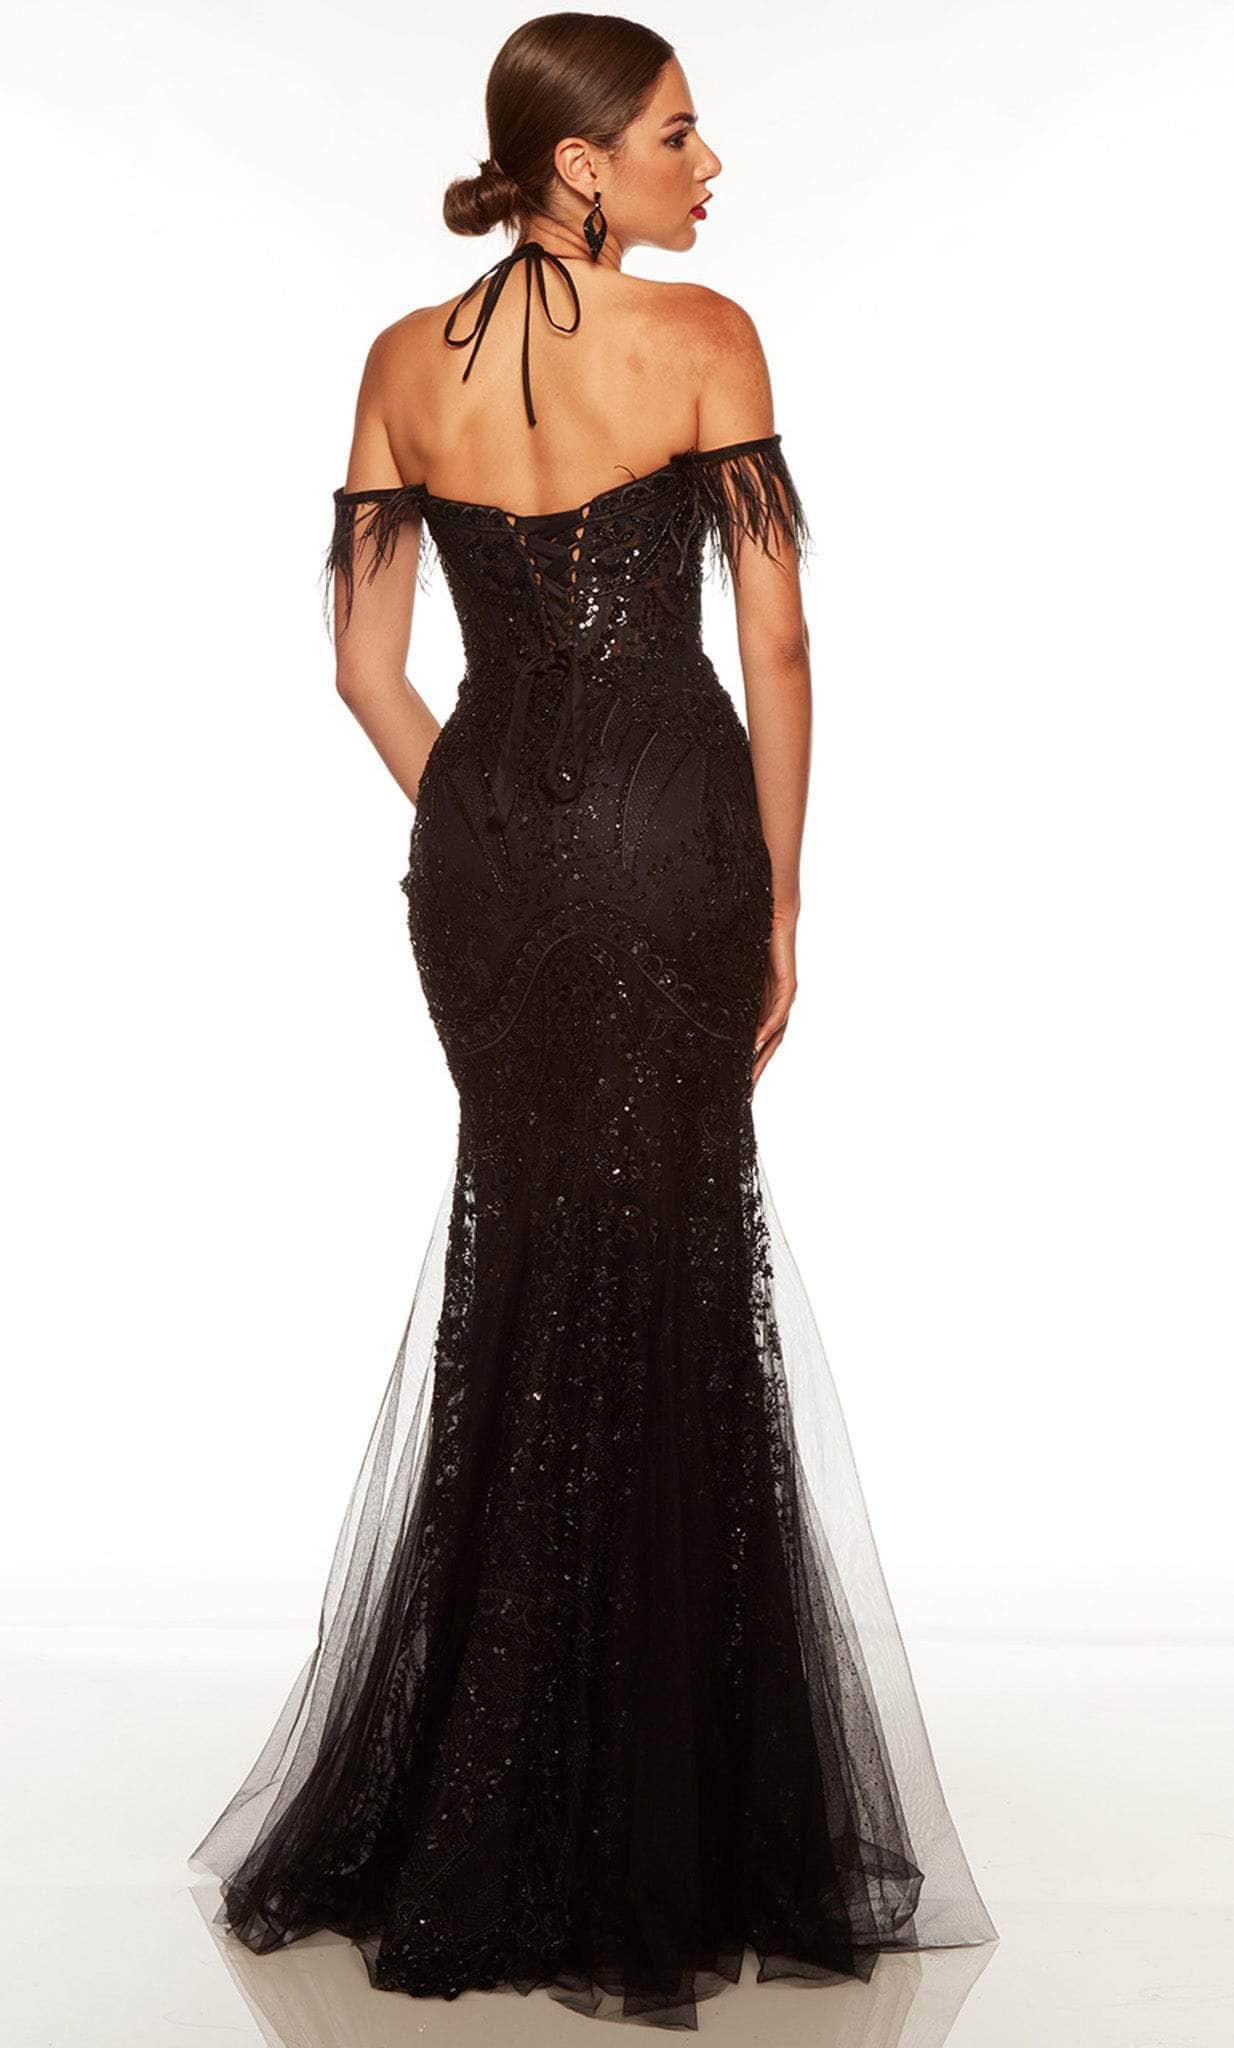 Alyce Paris 61416 - Scoop Neck Trumpet Prom Gown Evening Dresses 8 / Black